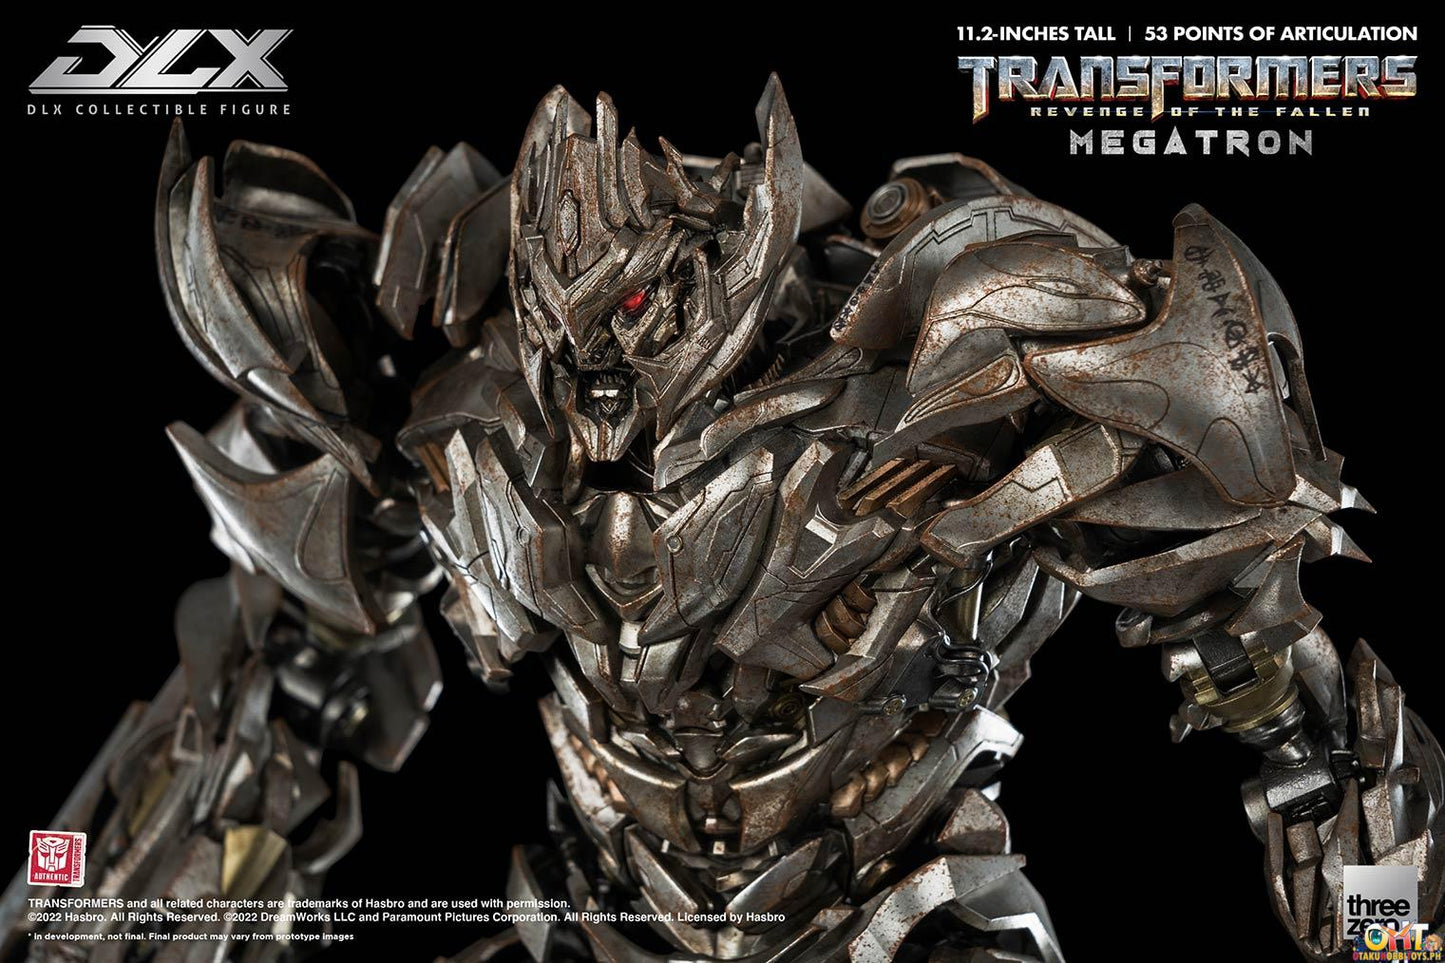 Threezero Transformers: Revenge of the Fallen DLX Megatron